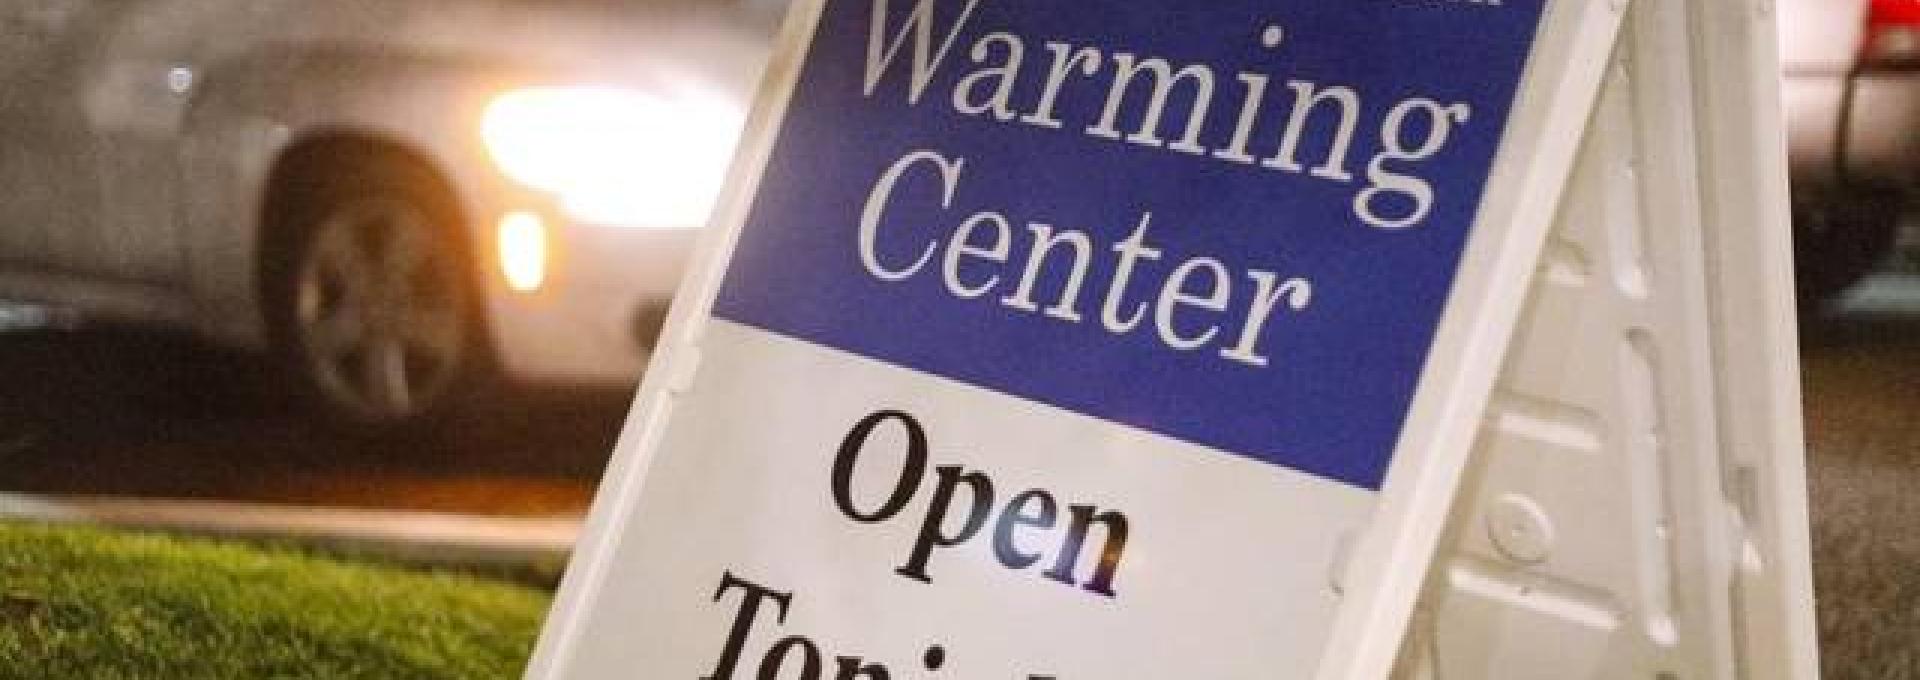 warming center sign photo